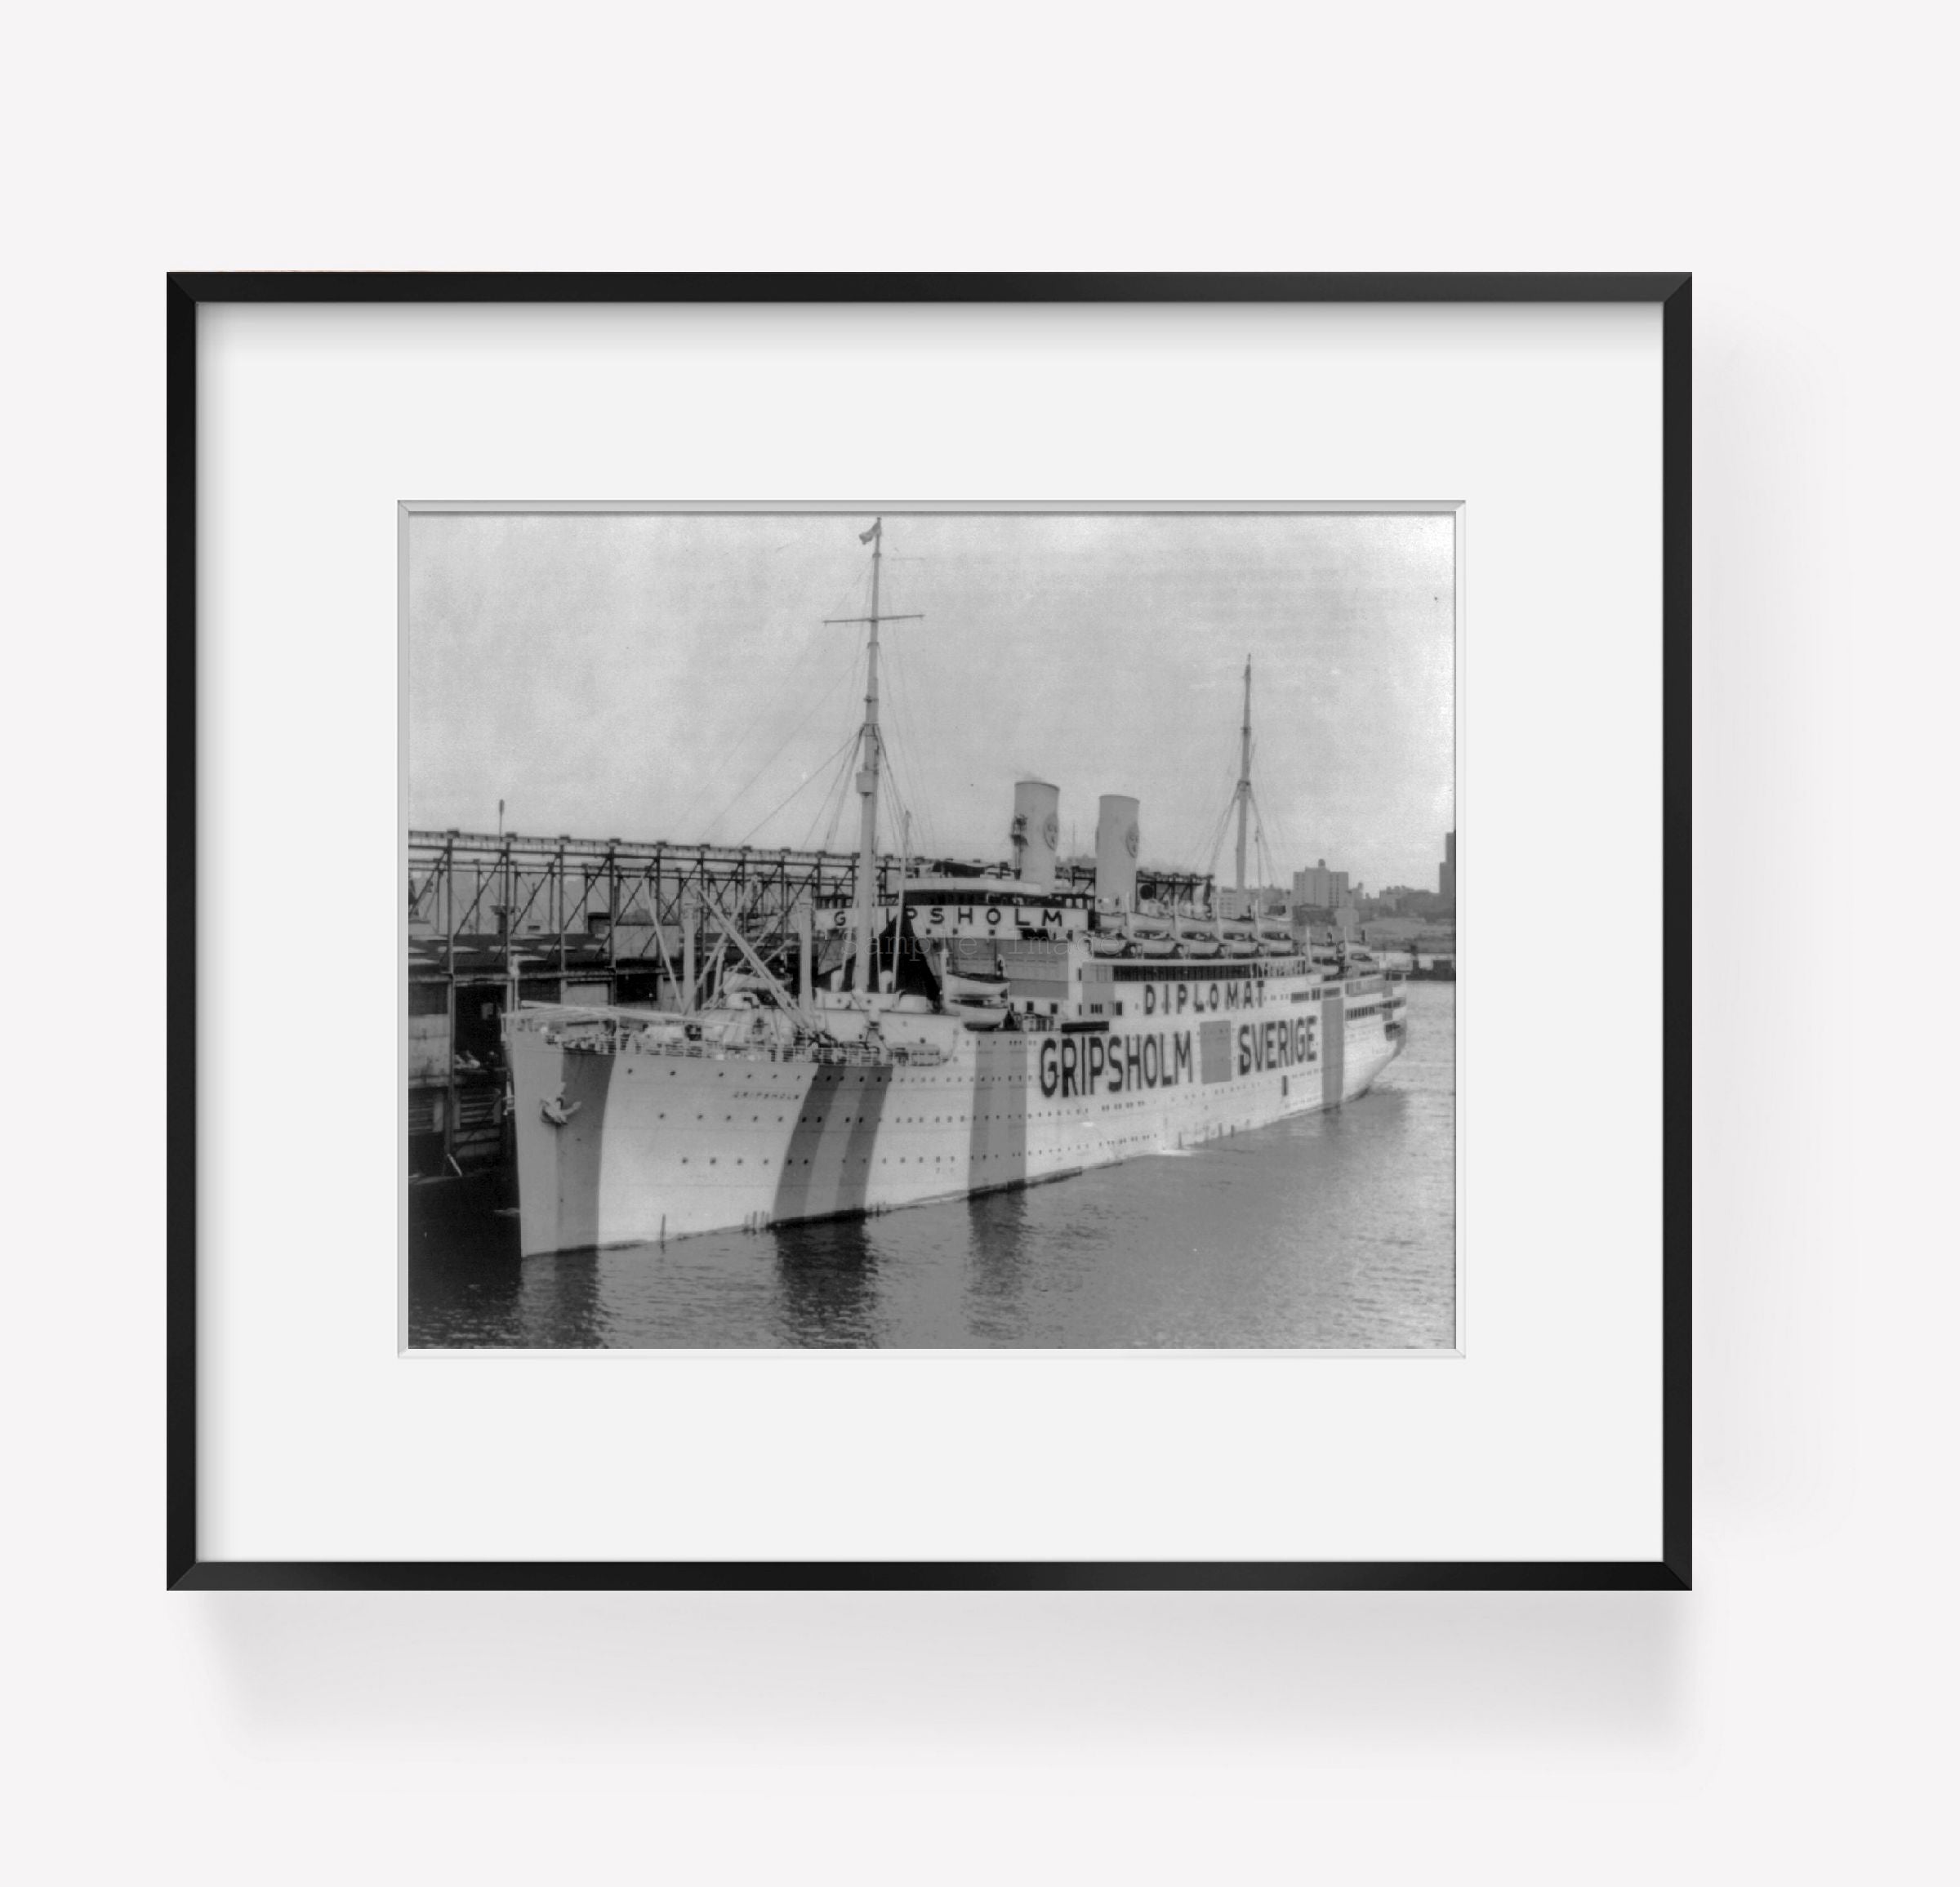 Photo: Exchange liner GRIPSHOLM loading at NY harbor, interned Japanese civilians